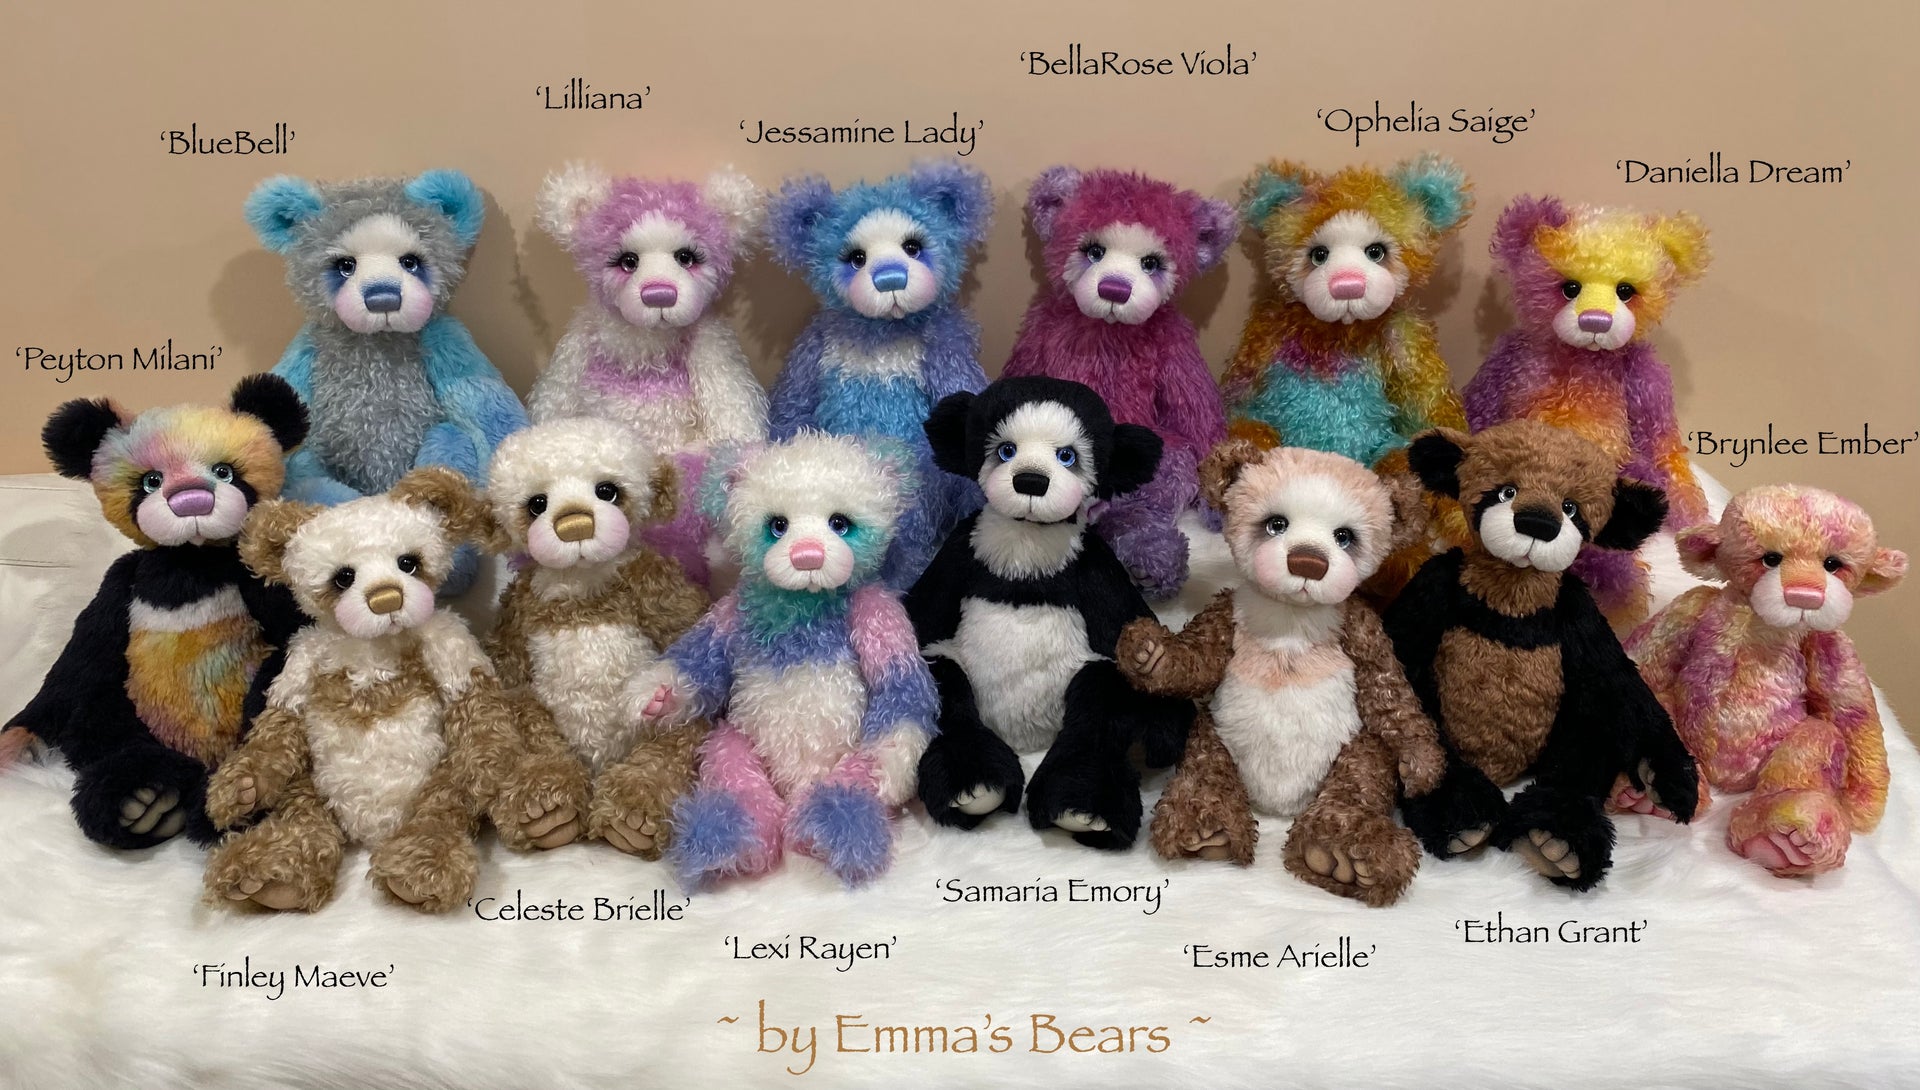 Jessamine Lady - 21" Mohair Toddler Artist Bear by Emma's Bears - OOAK